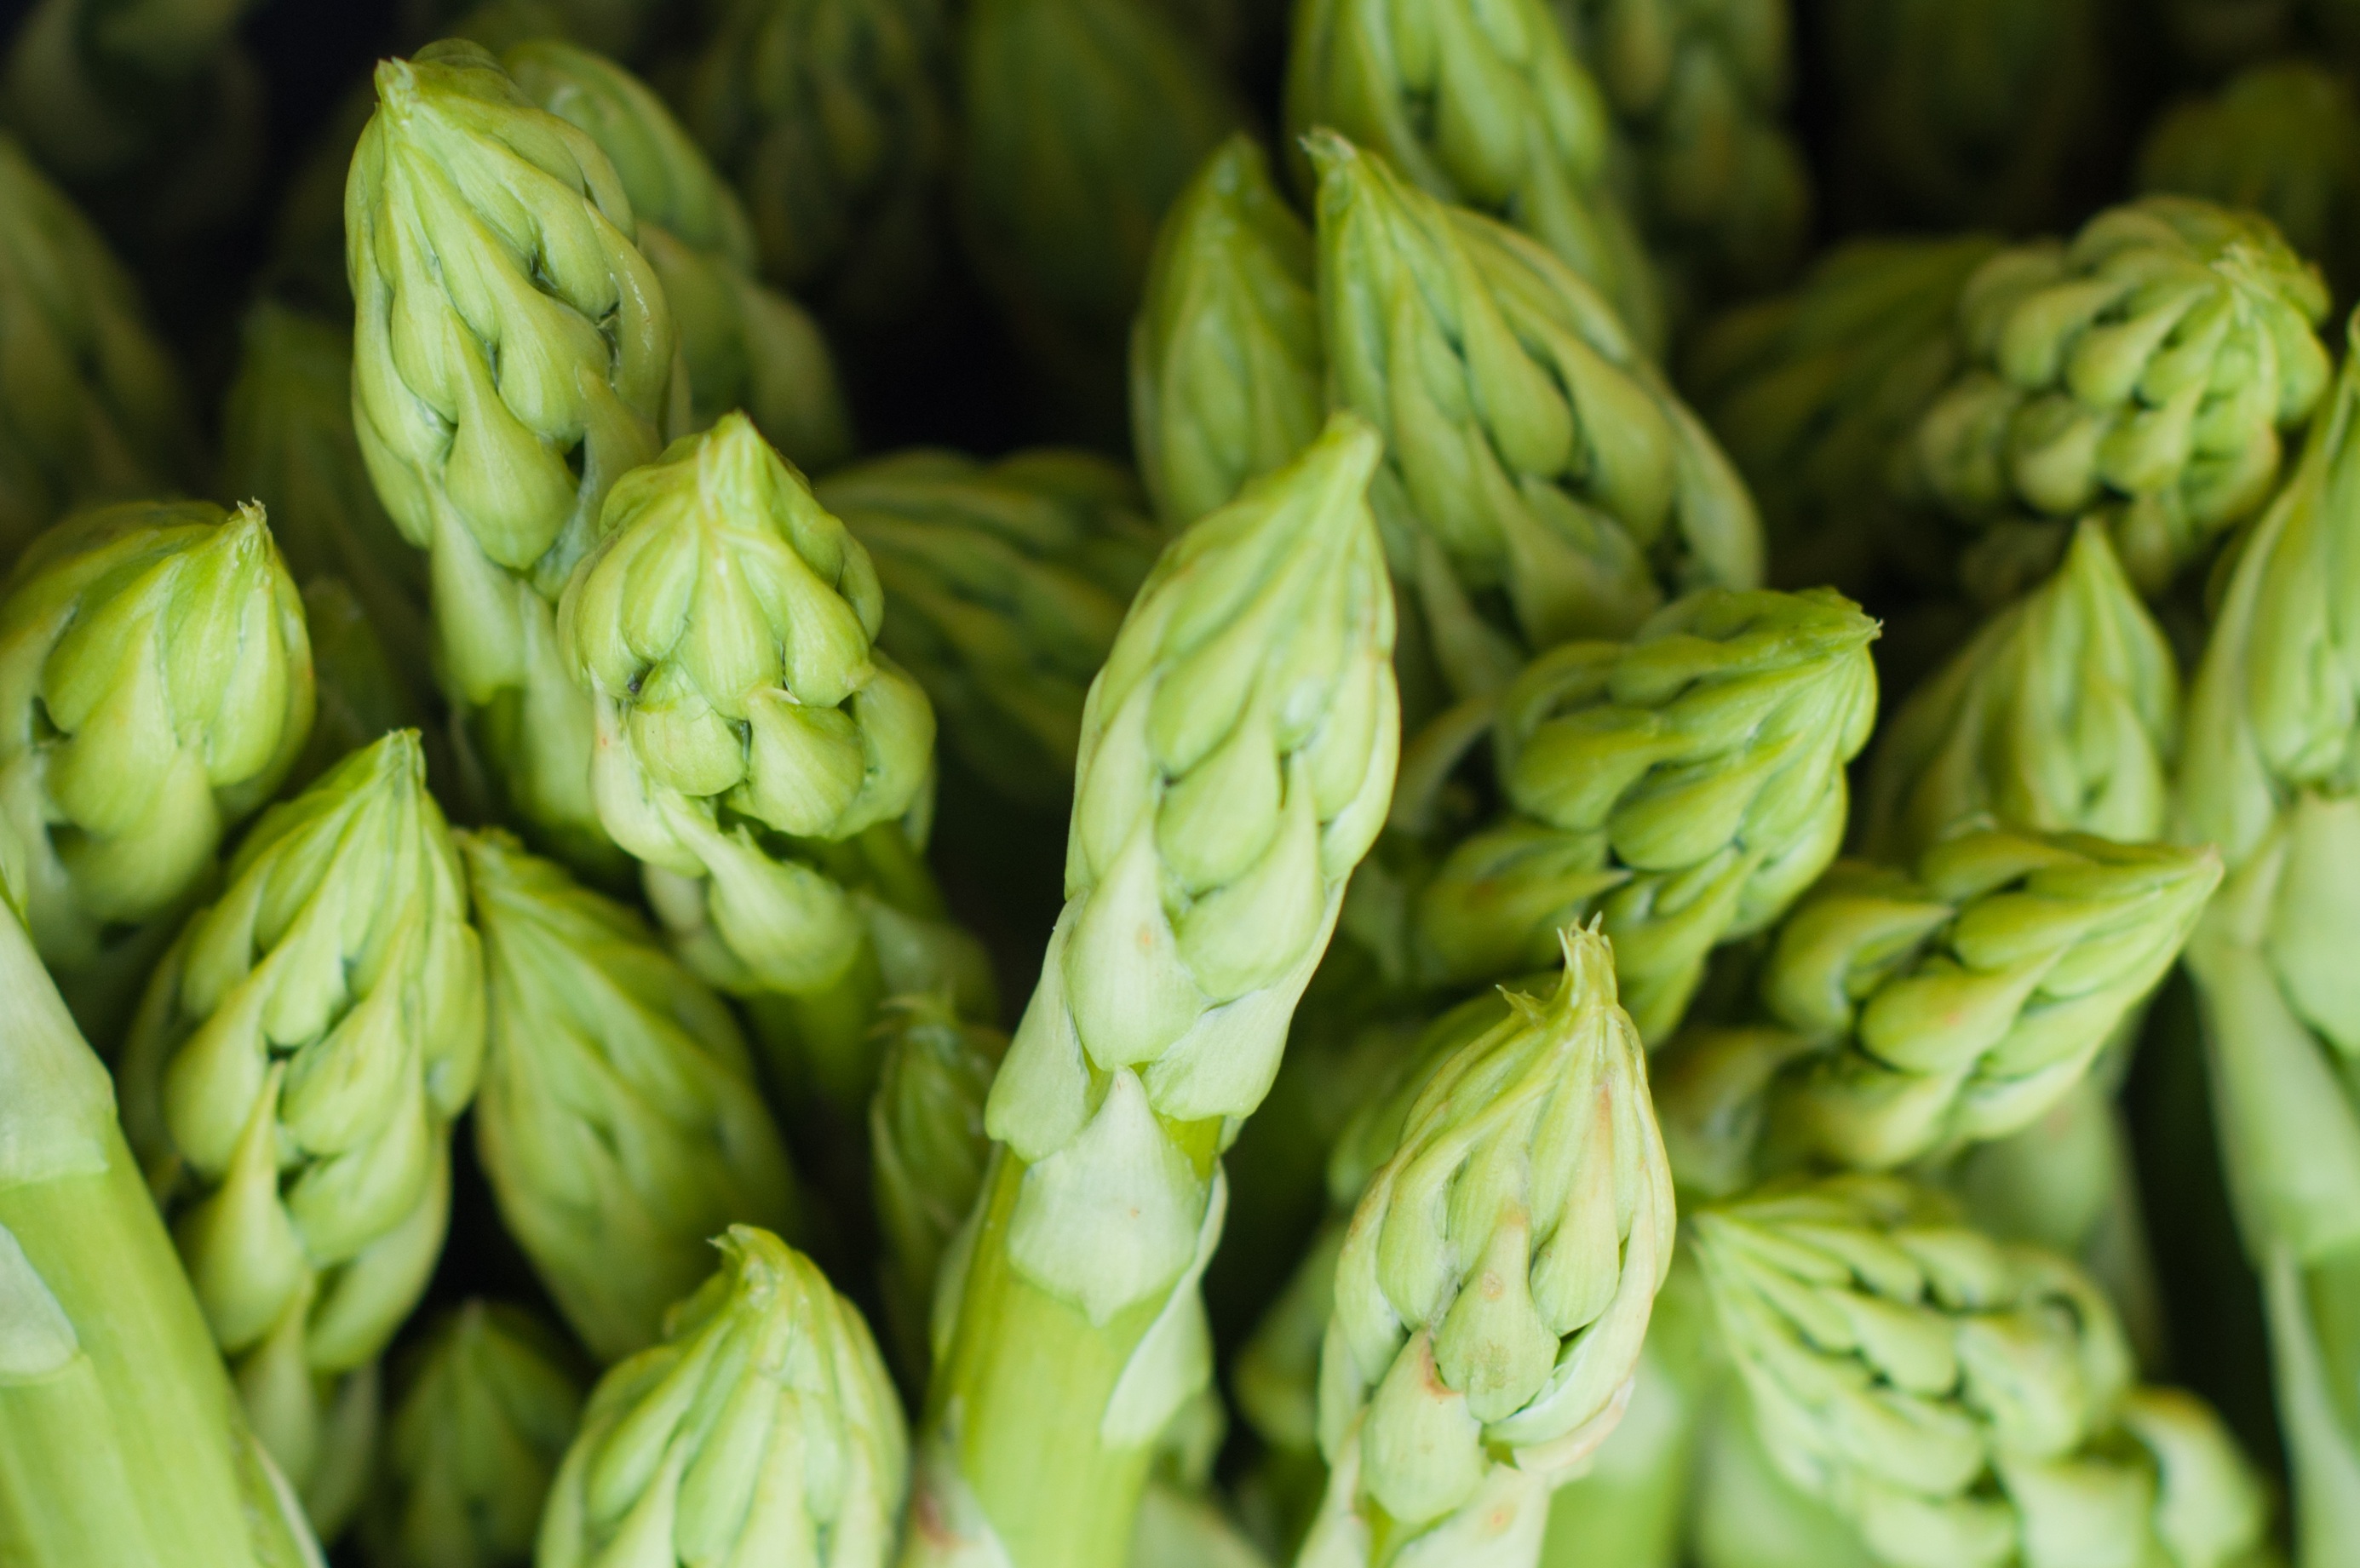 Green asparagus tips